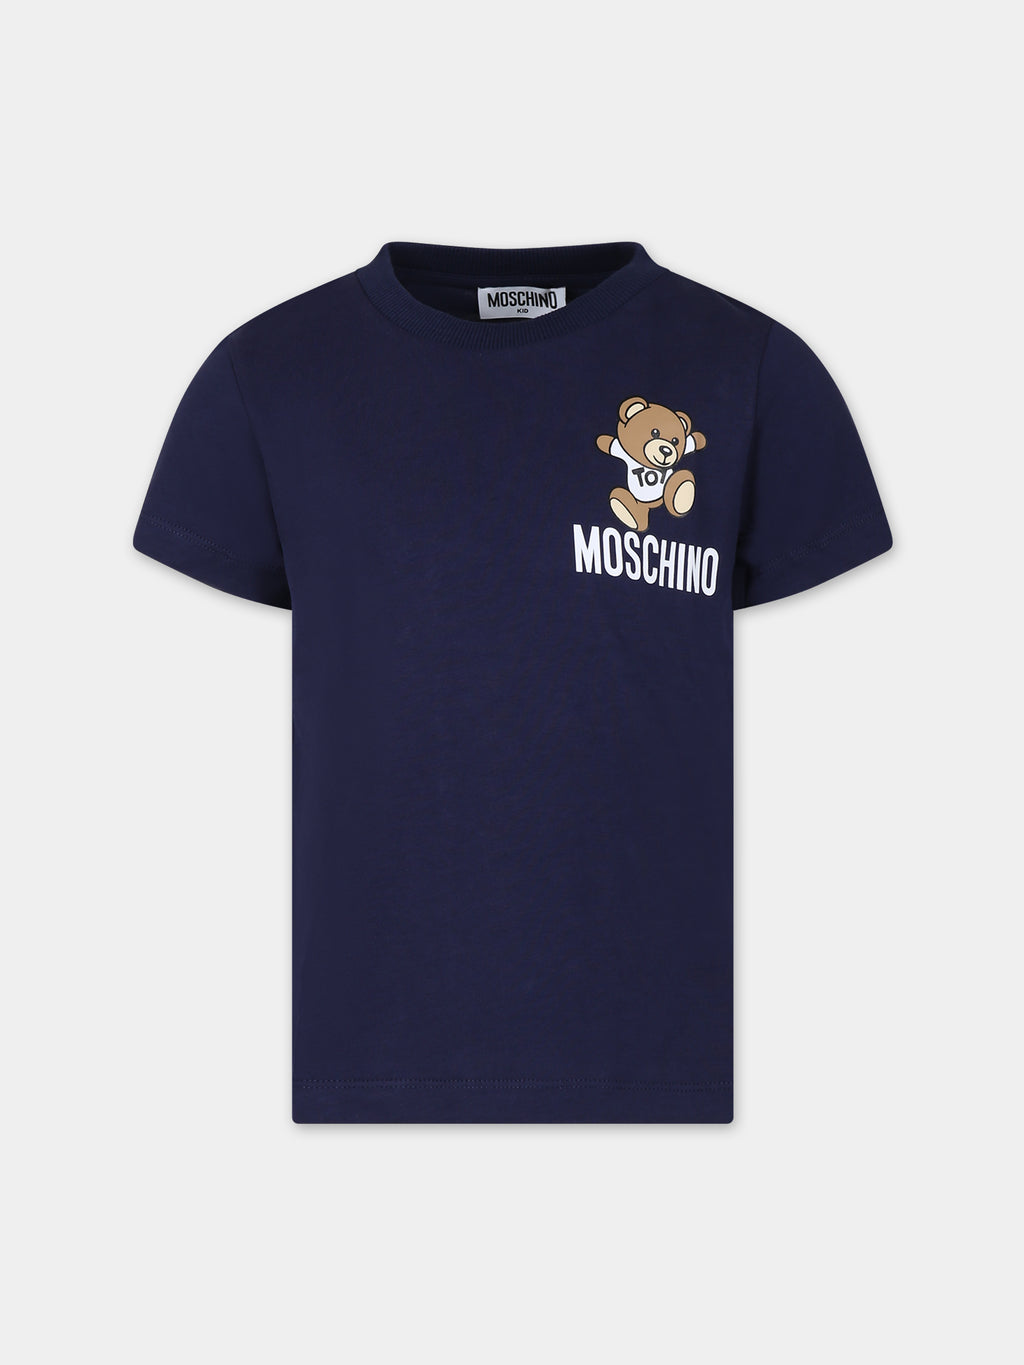 T-shirt bleu pour enfants avec Teddy bear et logo